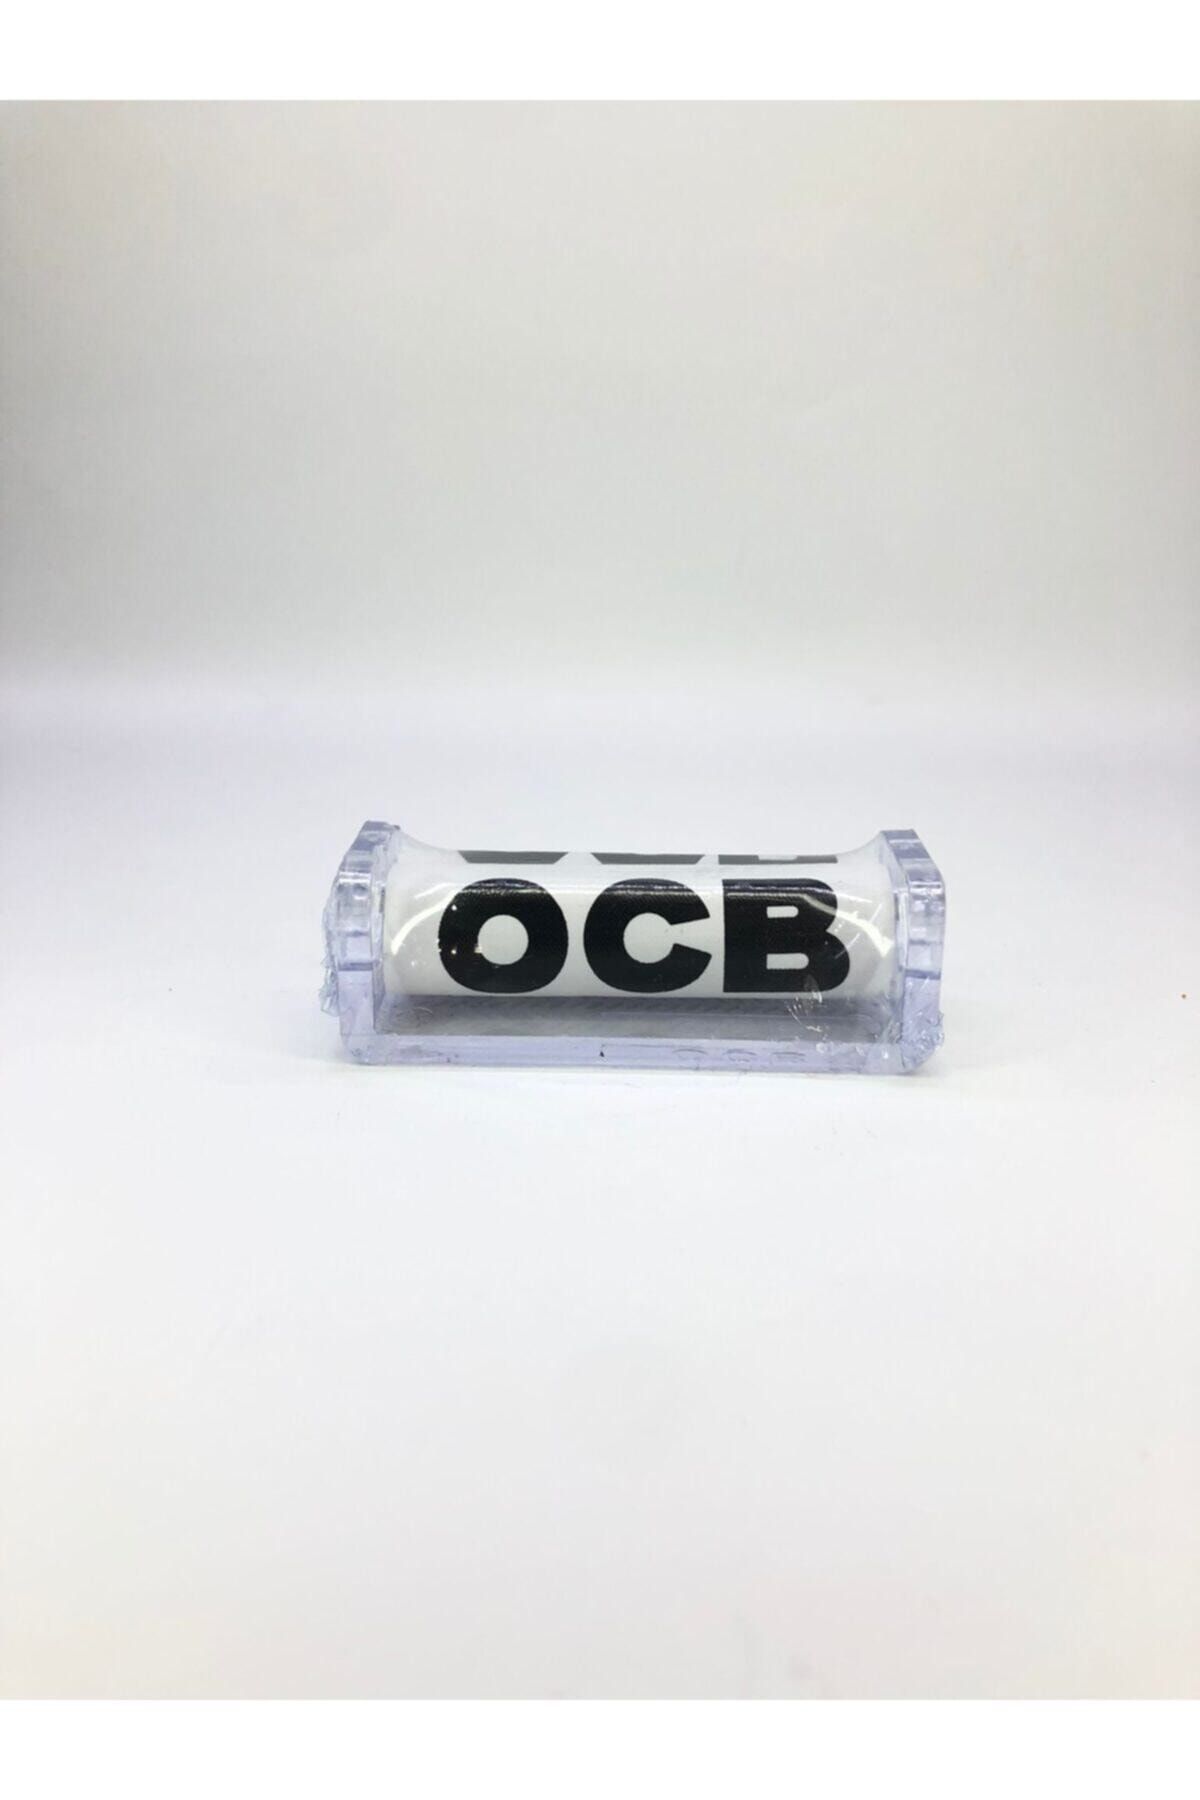 OCB Sigara Sarma Makinası Sarma Aleti Plastik Elde Sarma Makinası Rolls